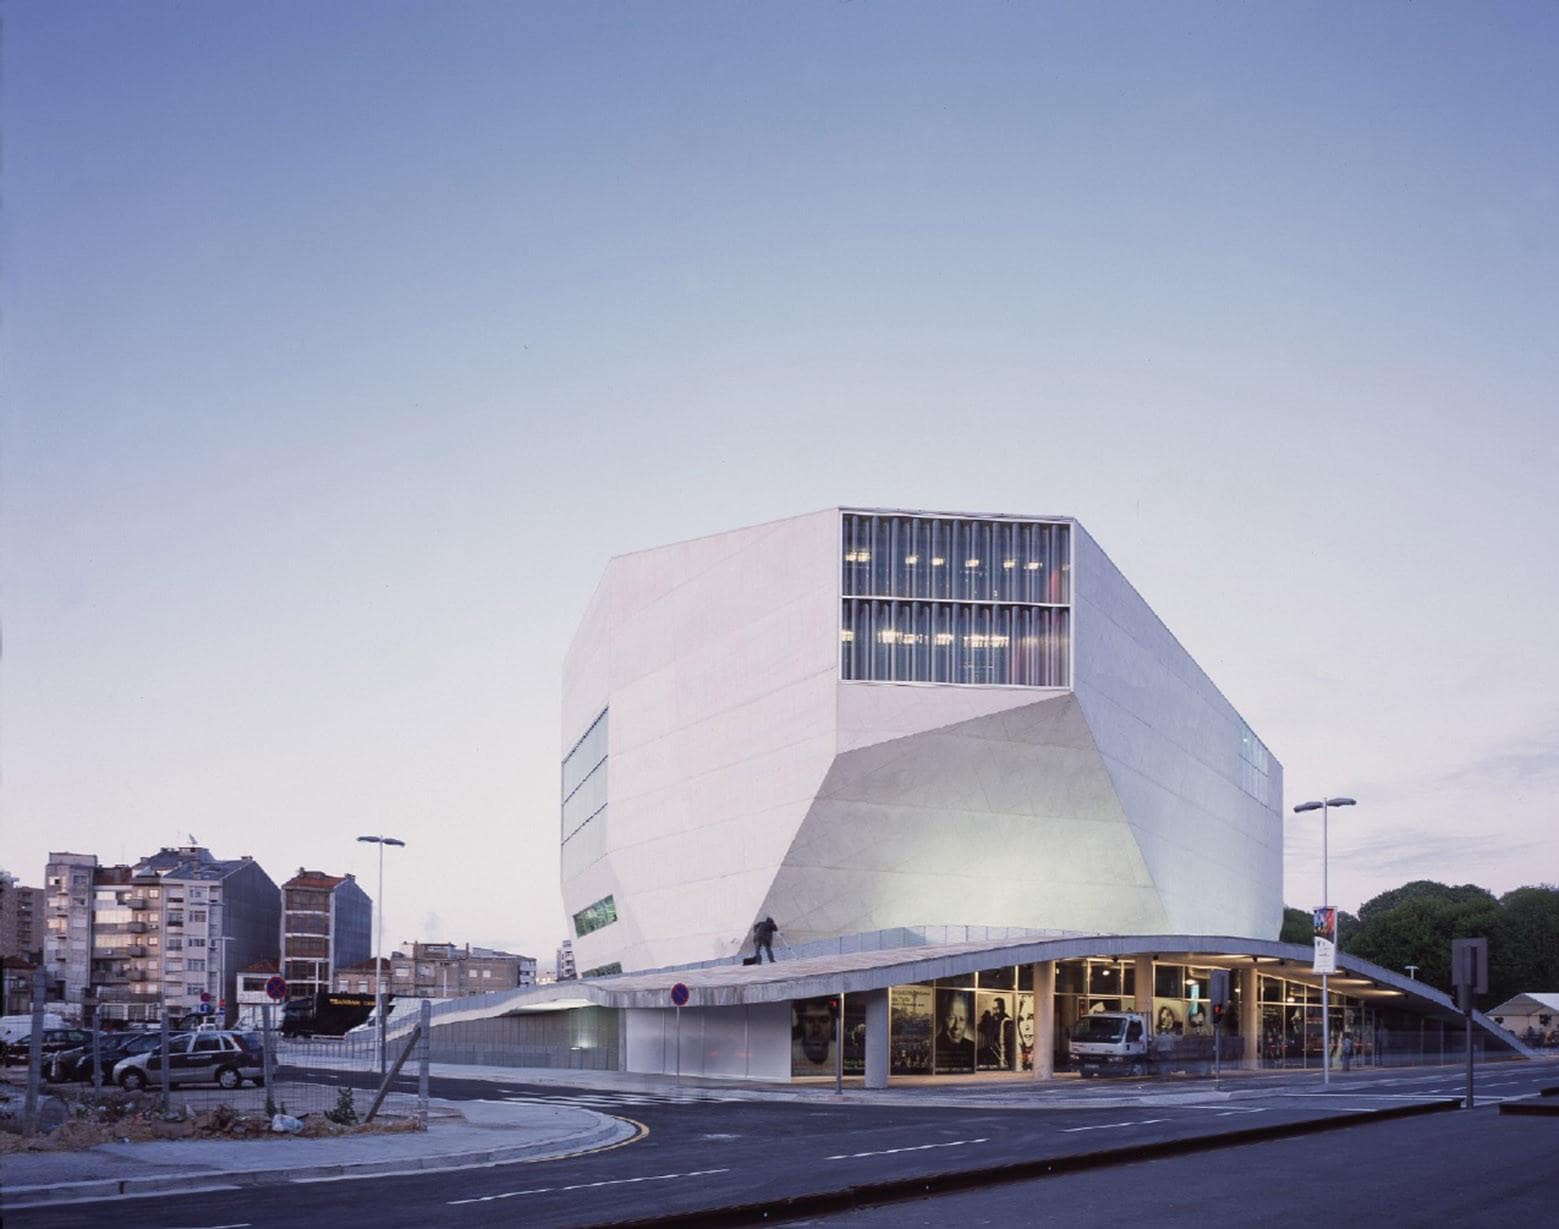 Entertainment building: photo Casa da Musica in Porto, designed by Rem Koolhaas